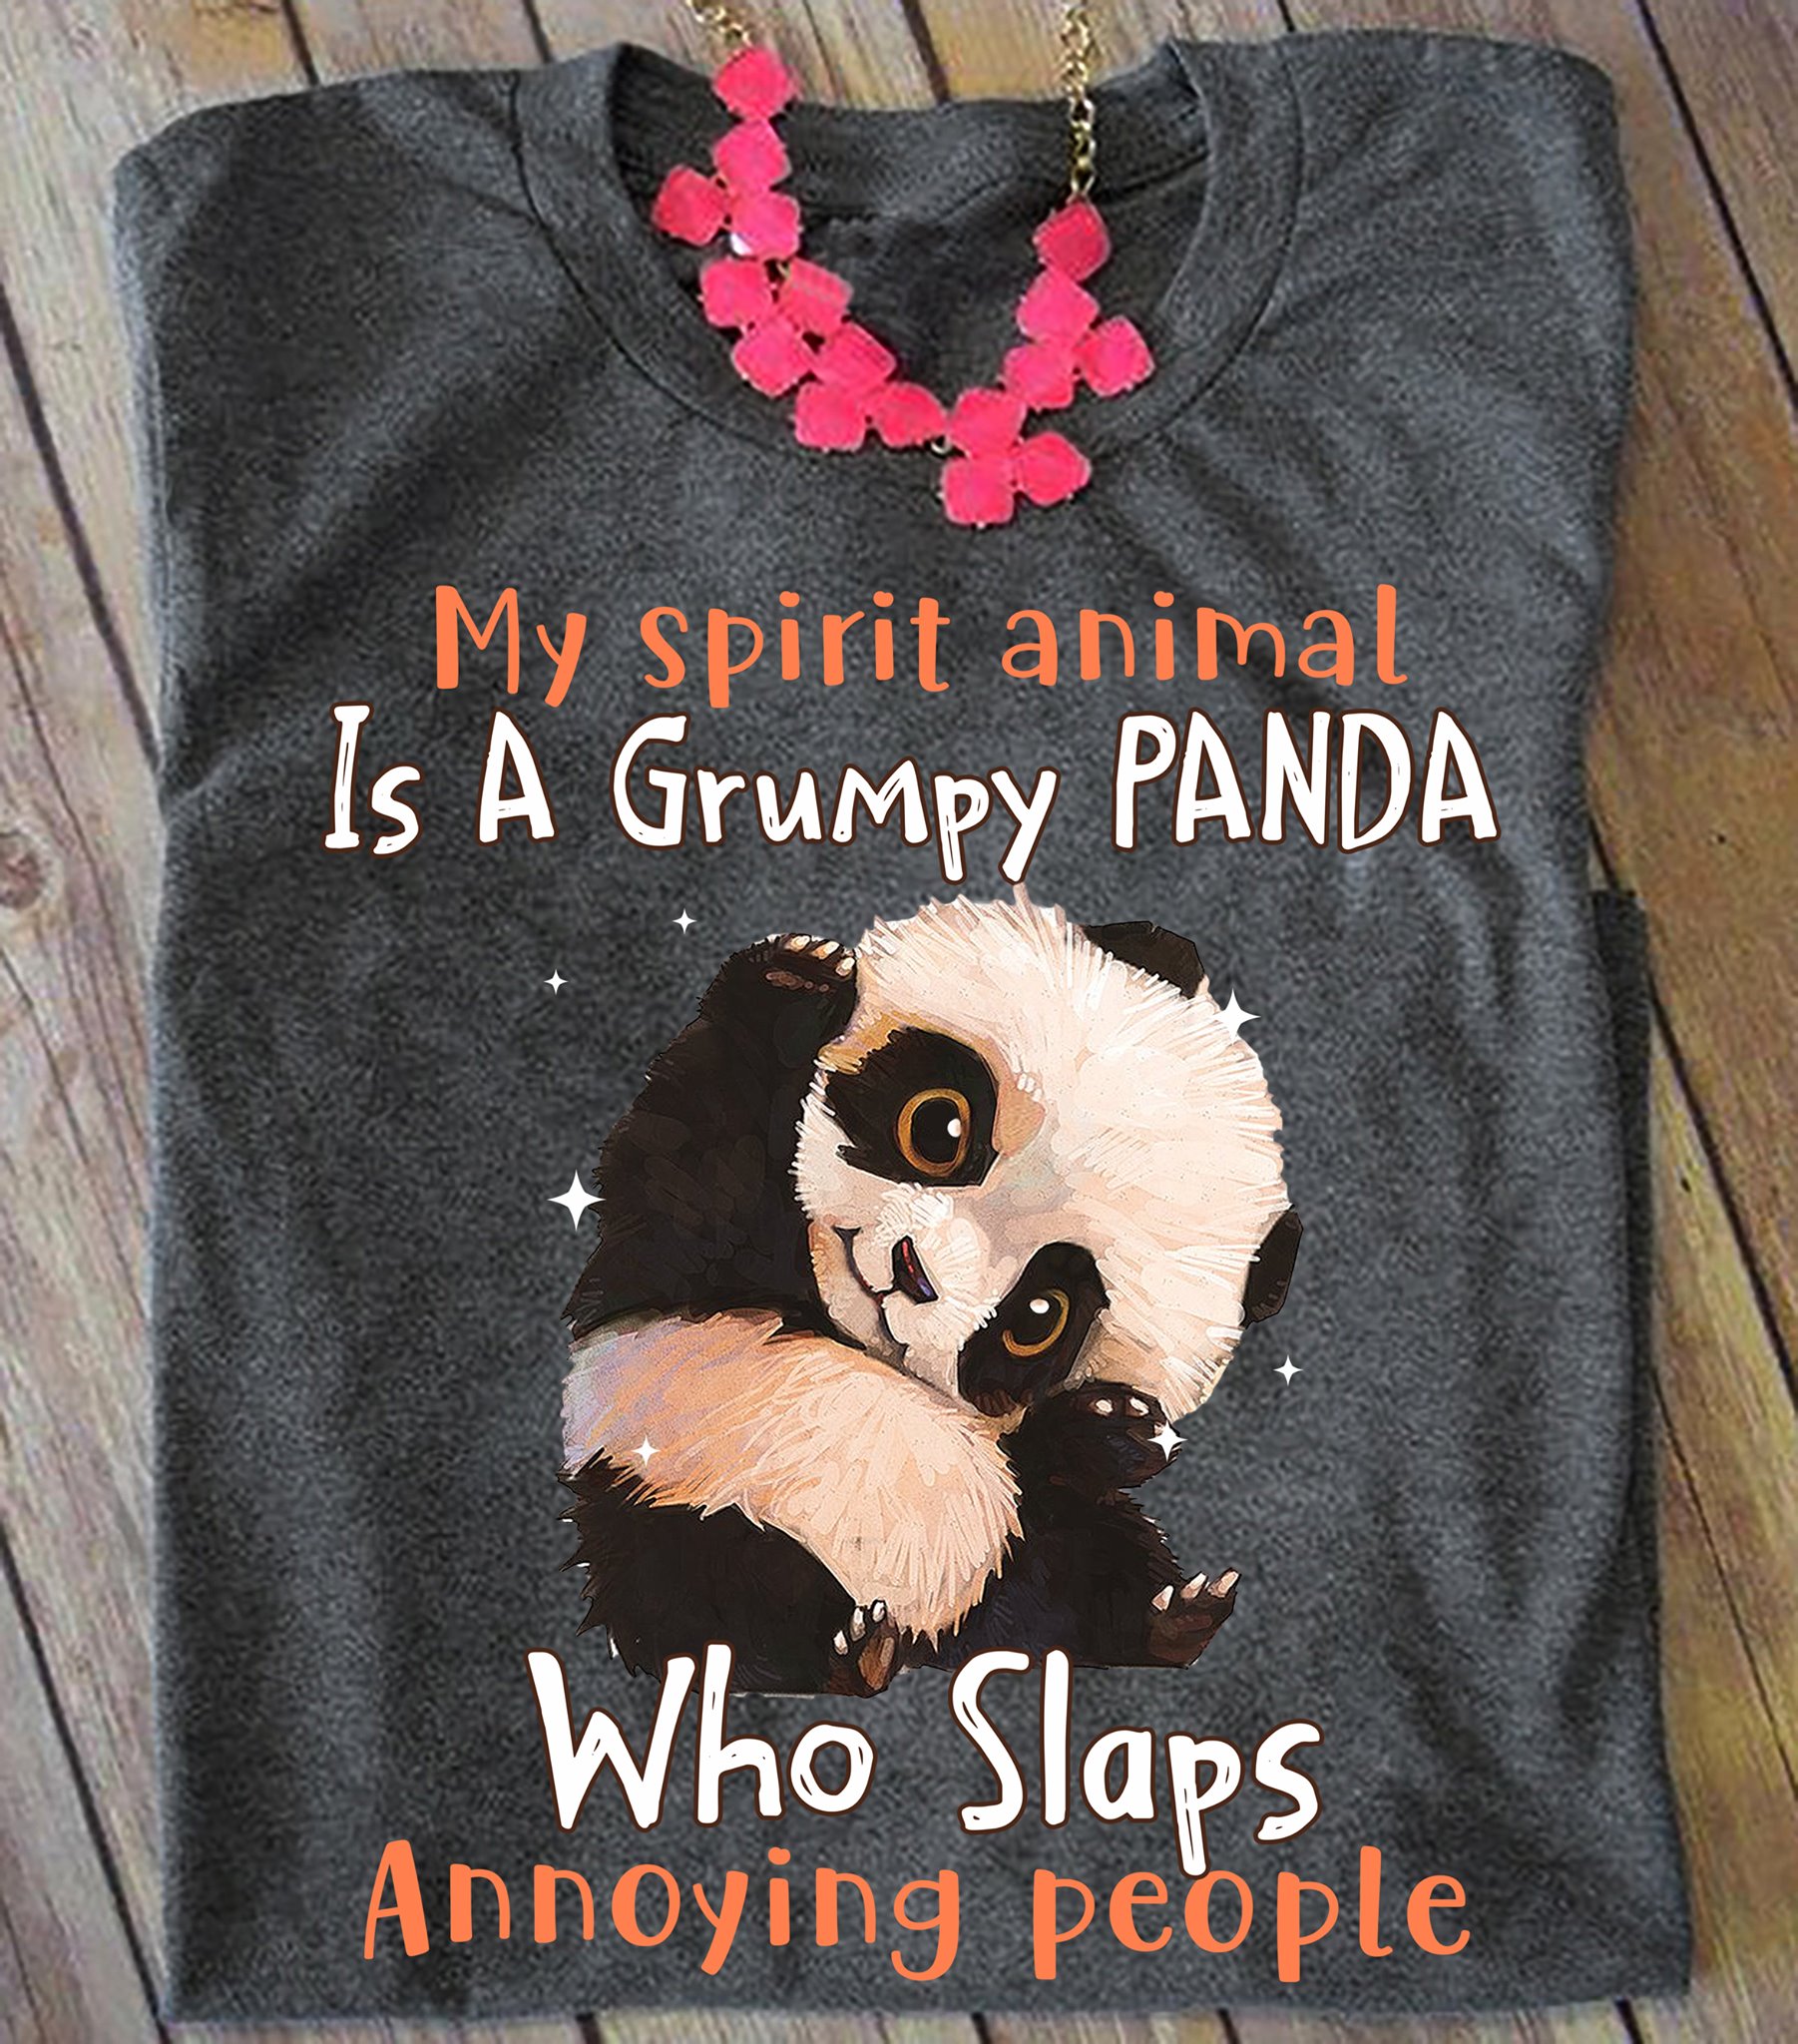 My spirit animal is a grumpy panda who slaps annoying people